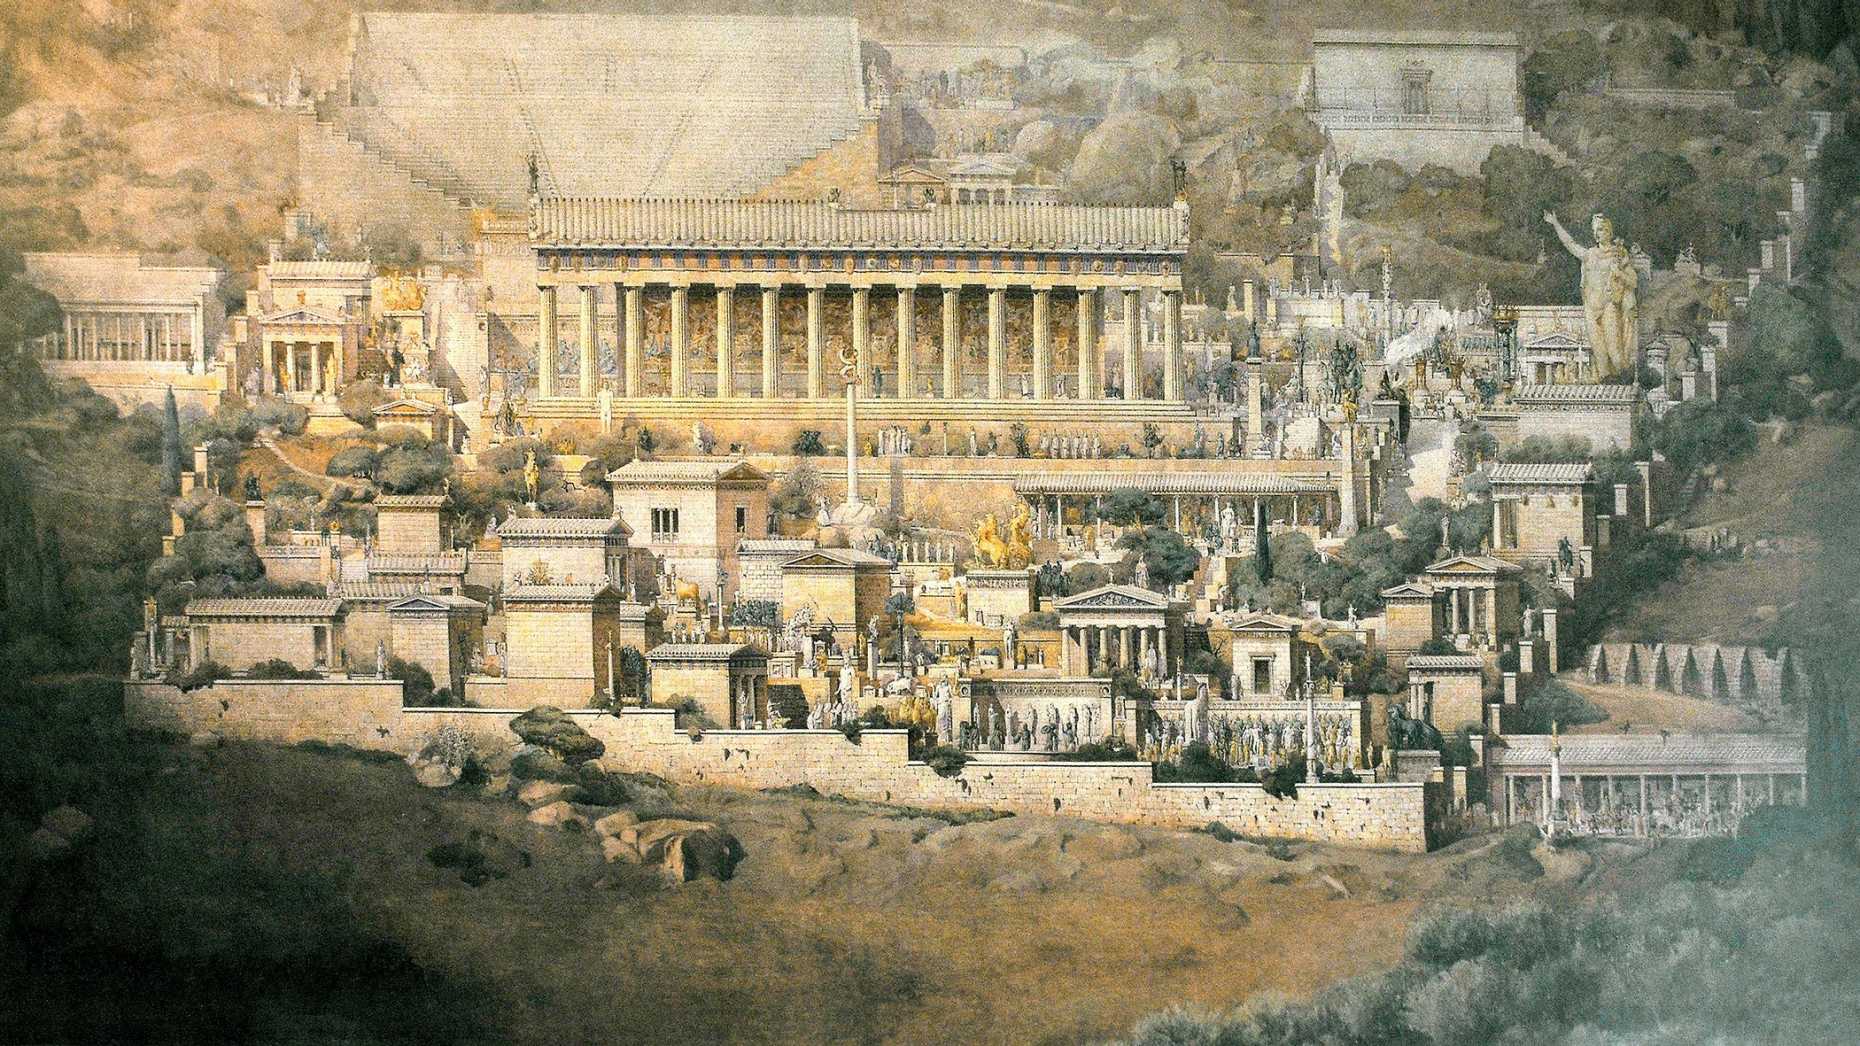 Enlarged view: Delphi